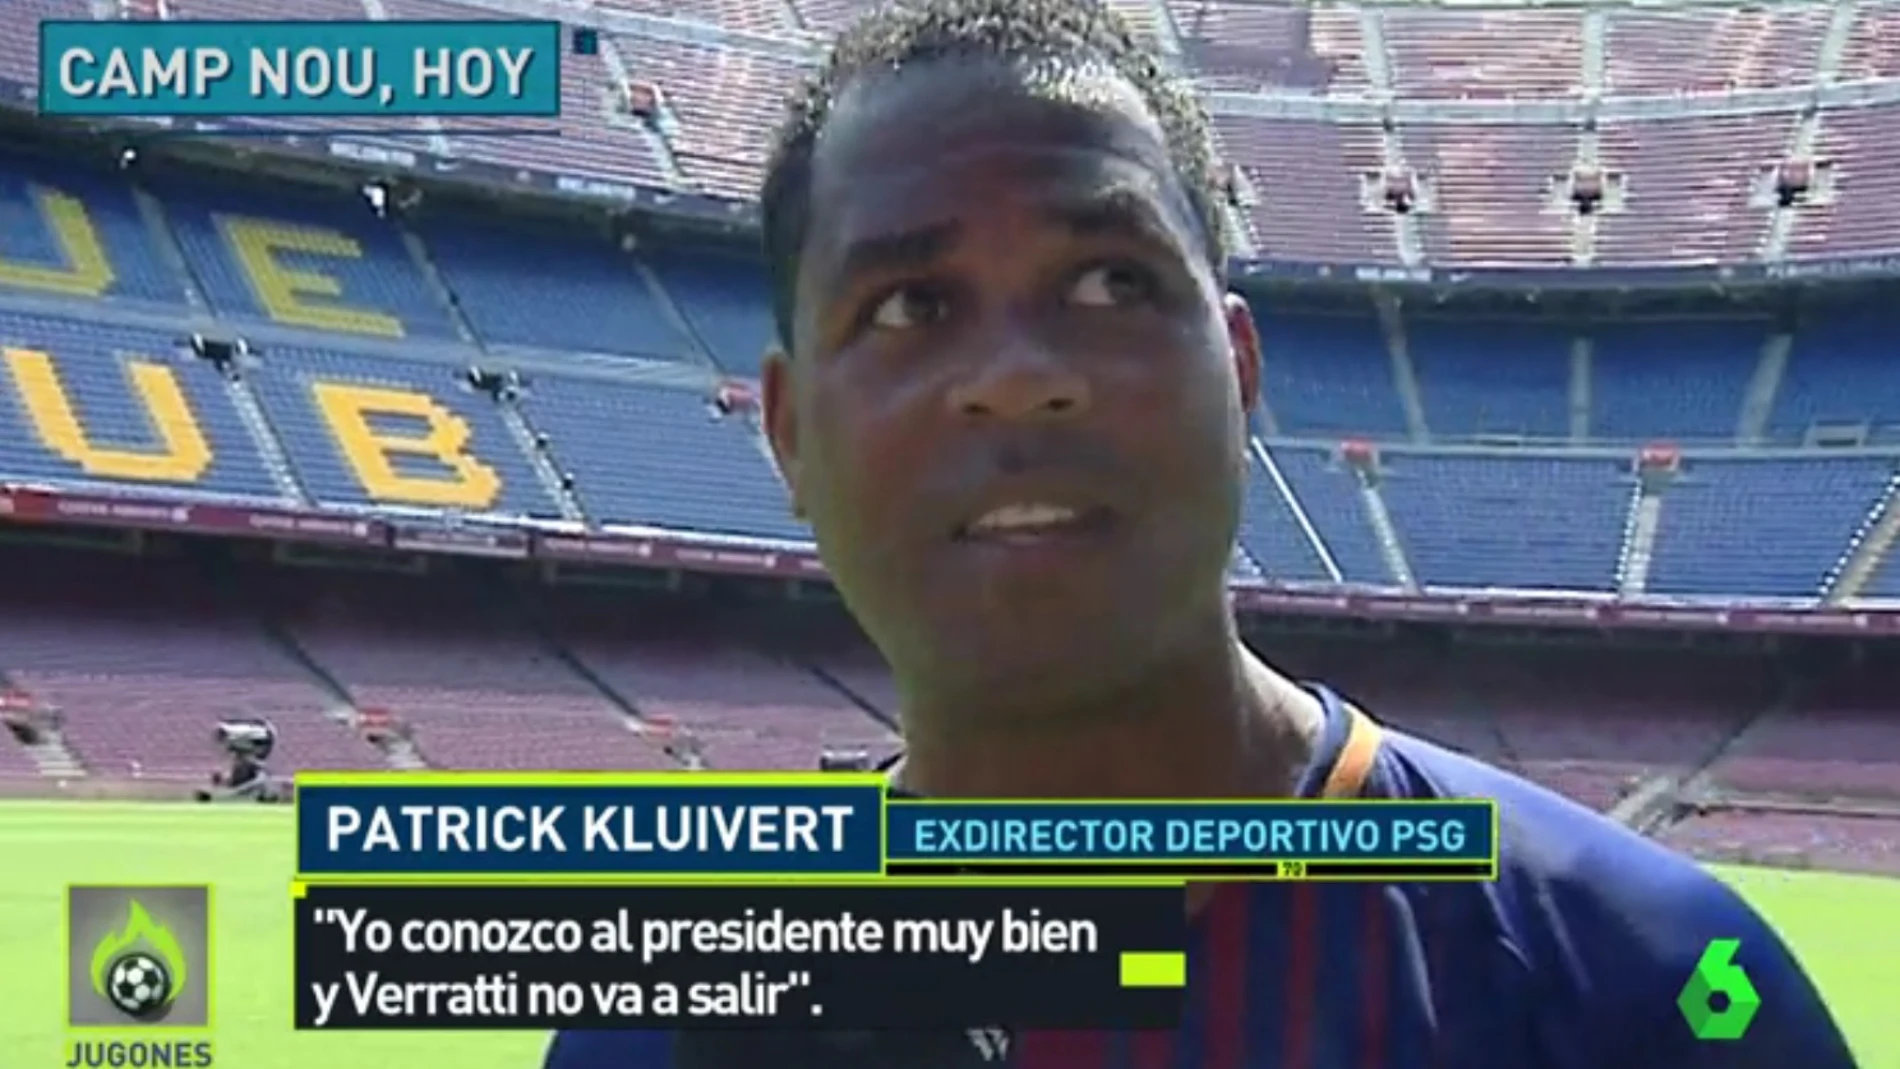 Patrick Kluivert, exjugador del Barcelona